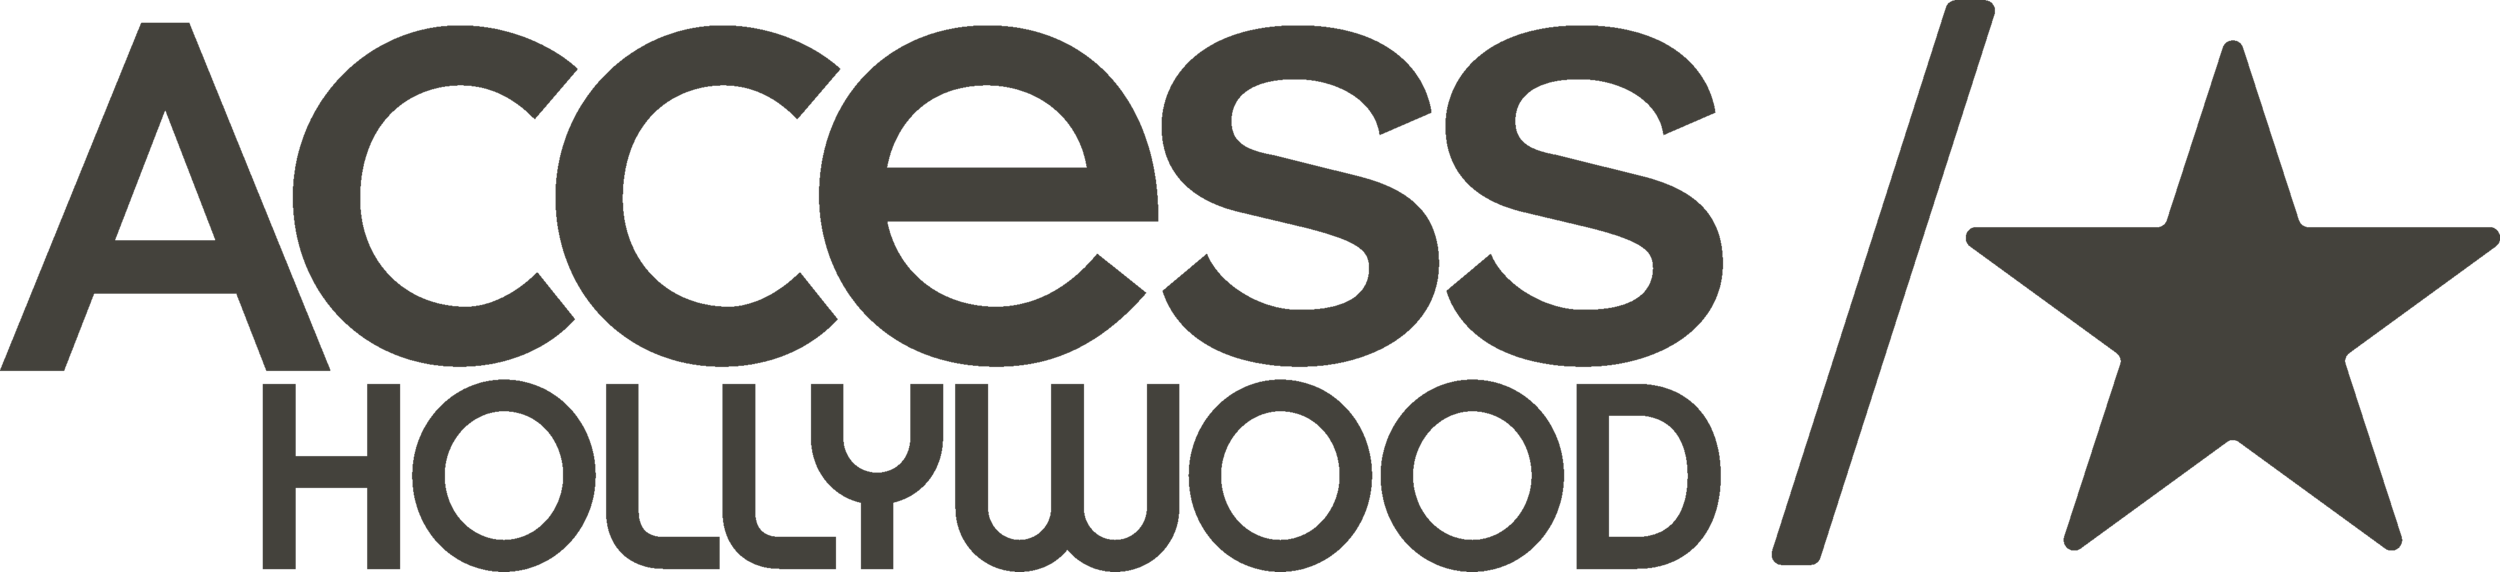 access-hollywood-logo-greyscale.png